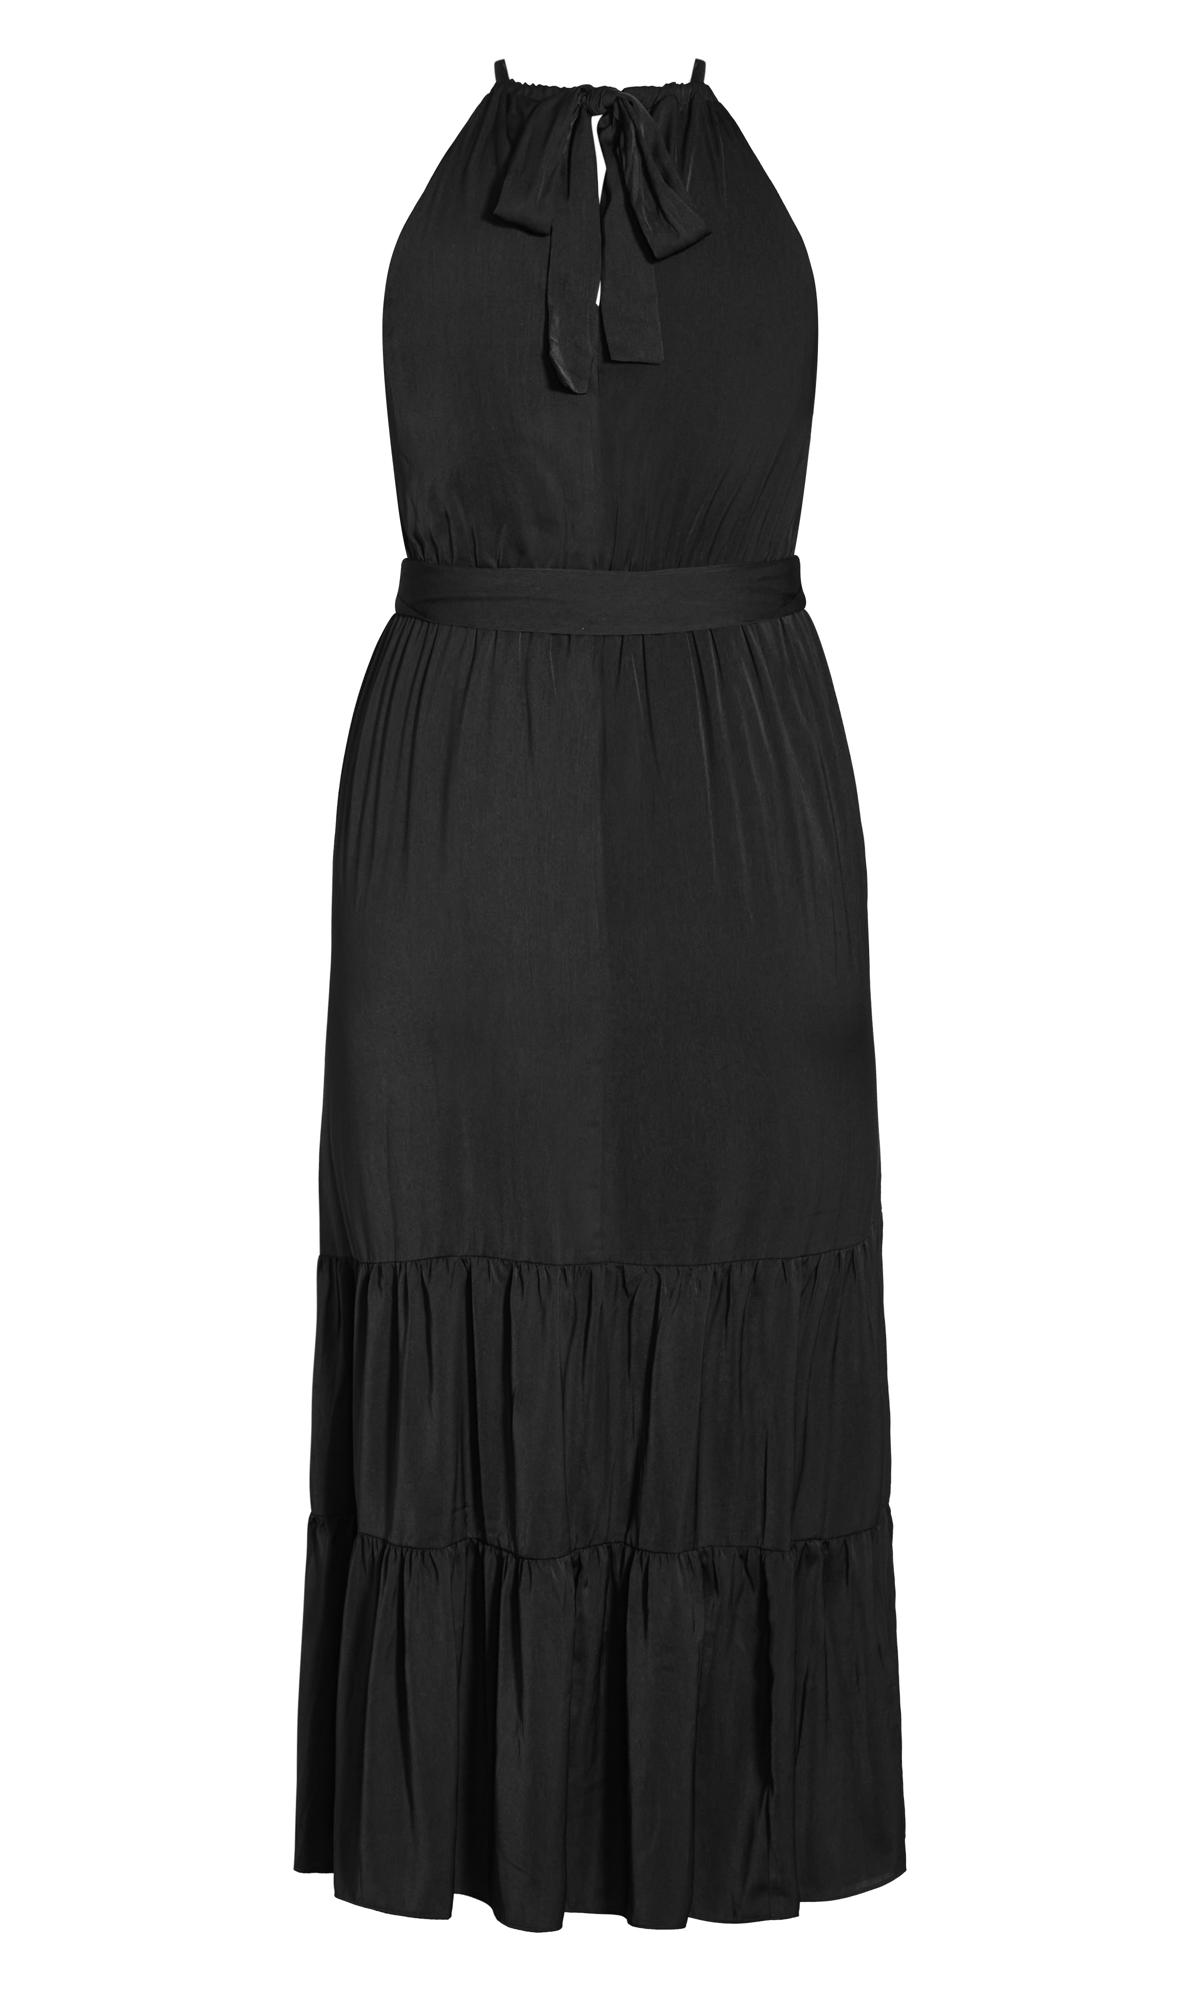 Tiered Black Maxi Dress & Fancy Friday - Nancys Fashion Style